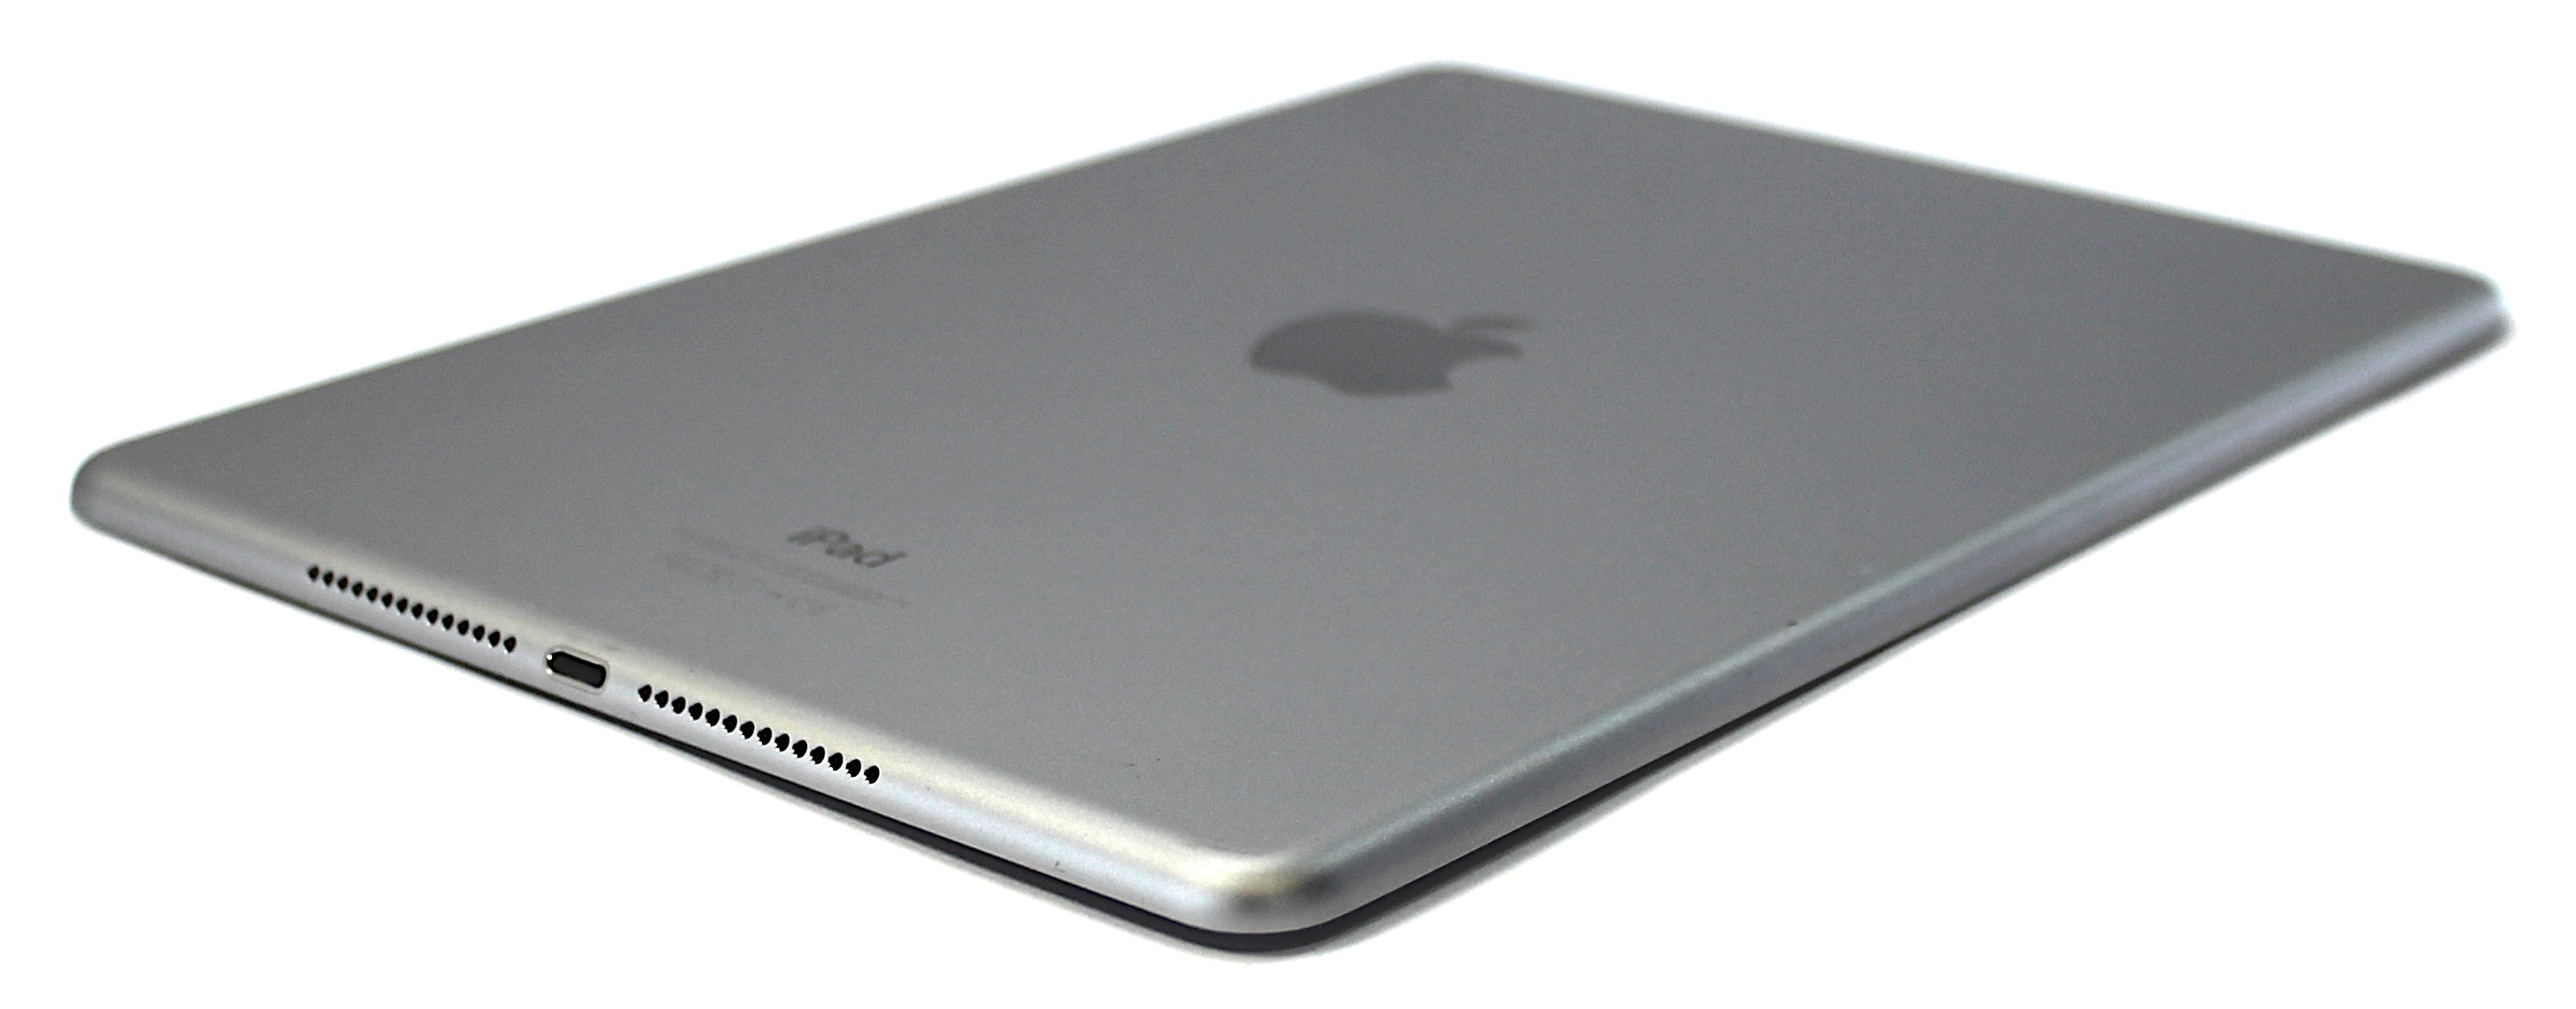 Apple iPad Air 2 Tablet, 64GB, WiFi, Space Grey, A1566